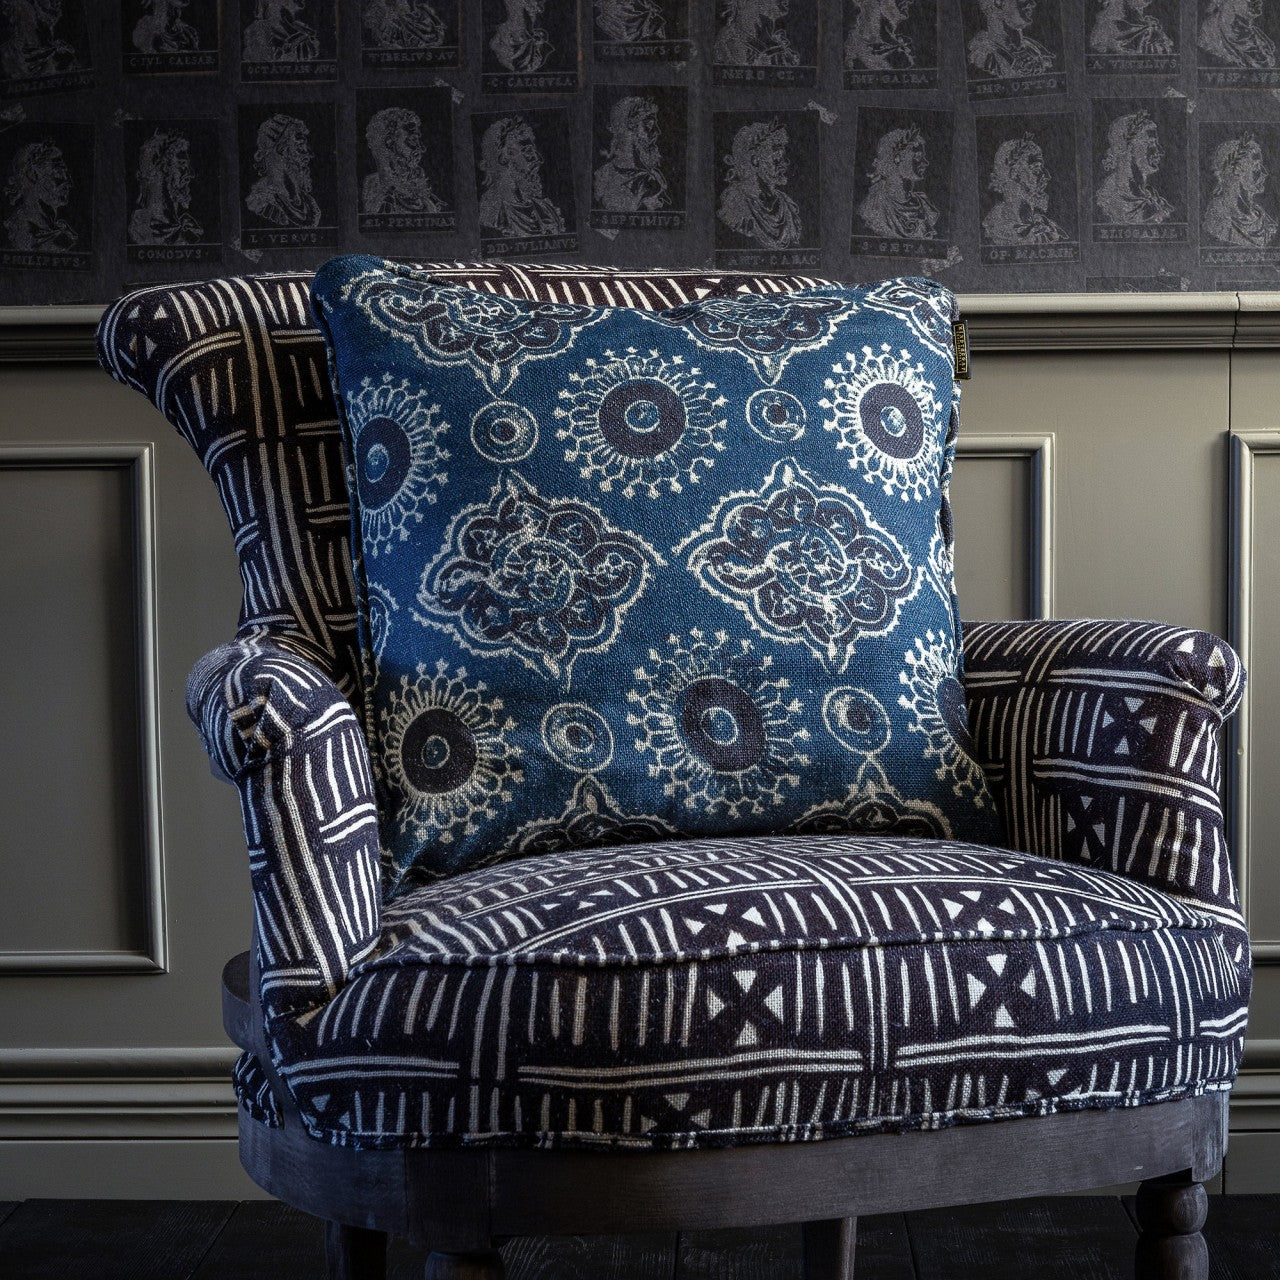 TIBERIUS Linen Embroidered Cushion_Cushions_Mindthegap